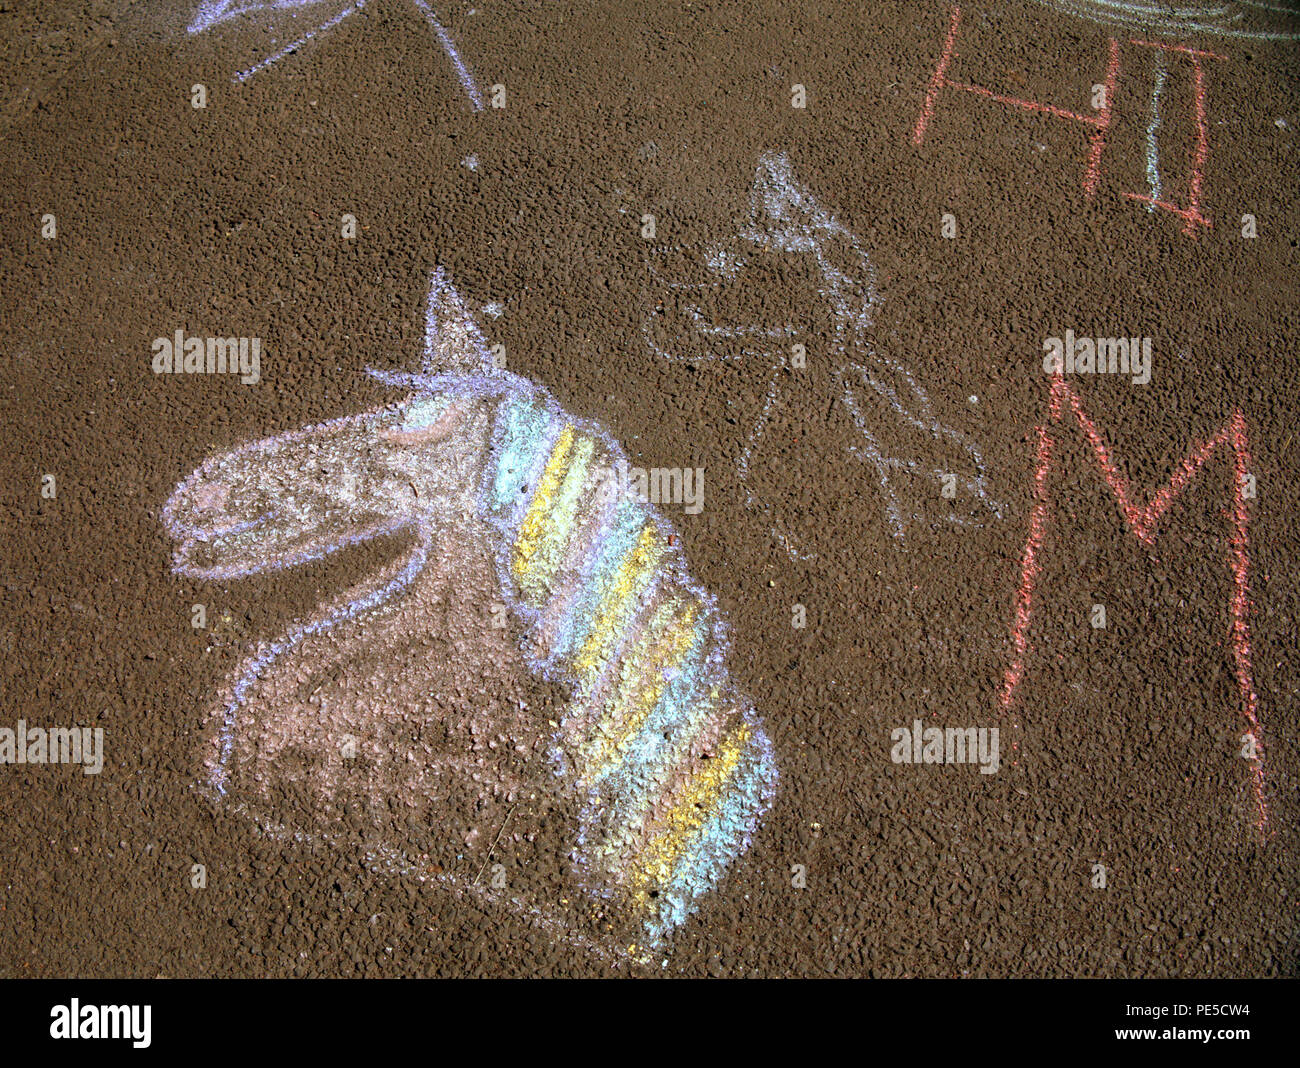 children's chalk drawing of a unicorn on asphalt copy space Stock Photo